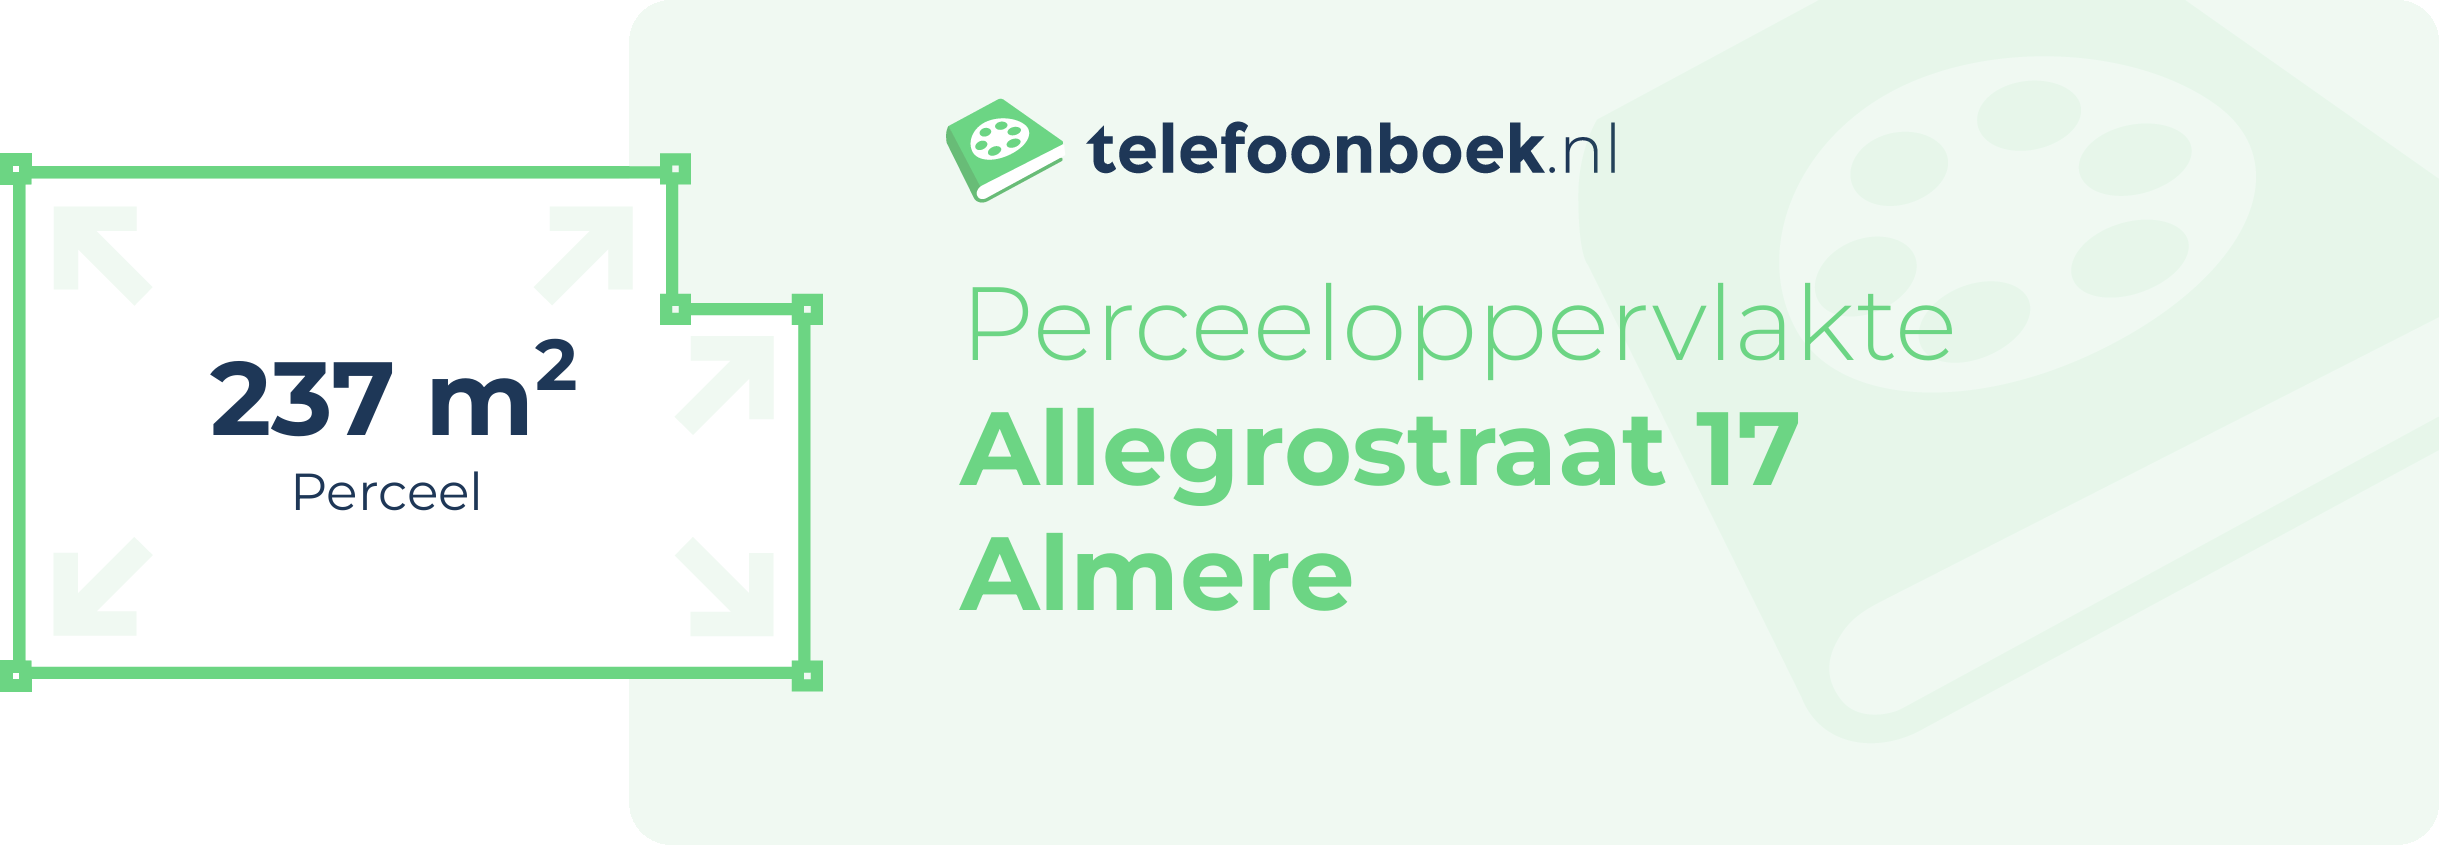 Perceeloppervlakte Allegrostraat 17 Almere